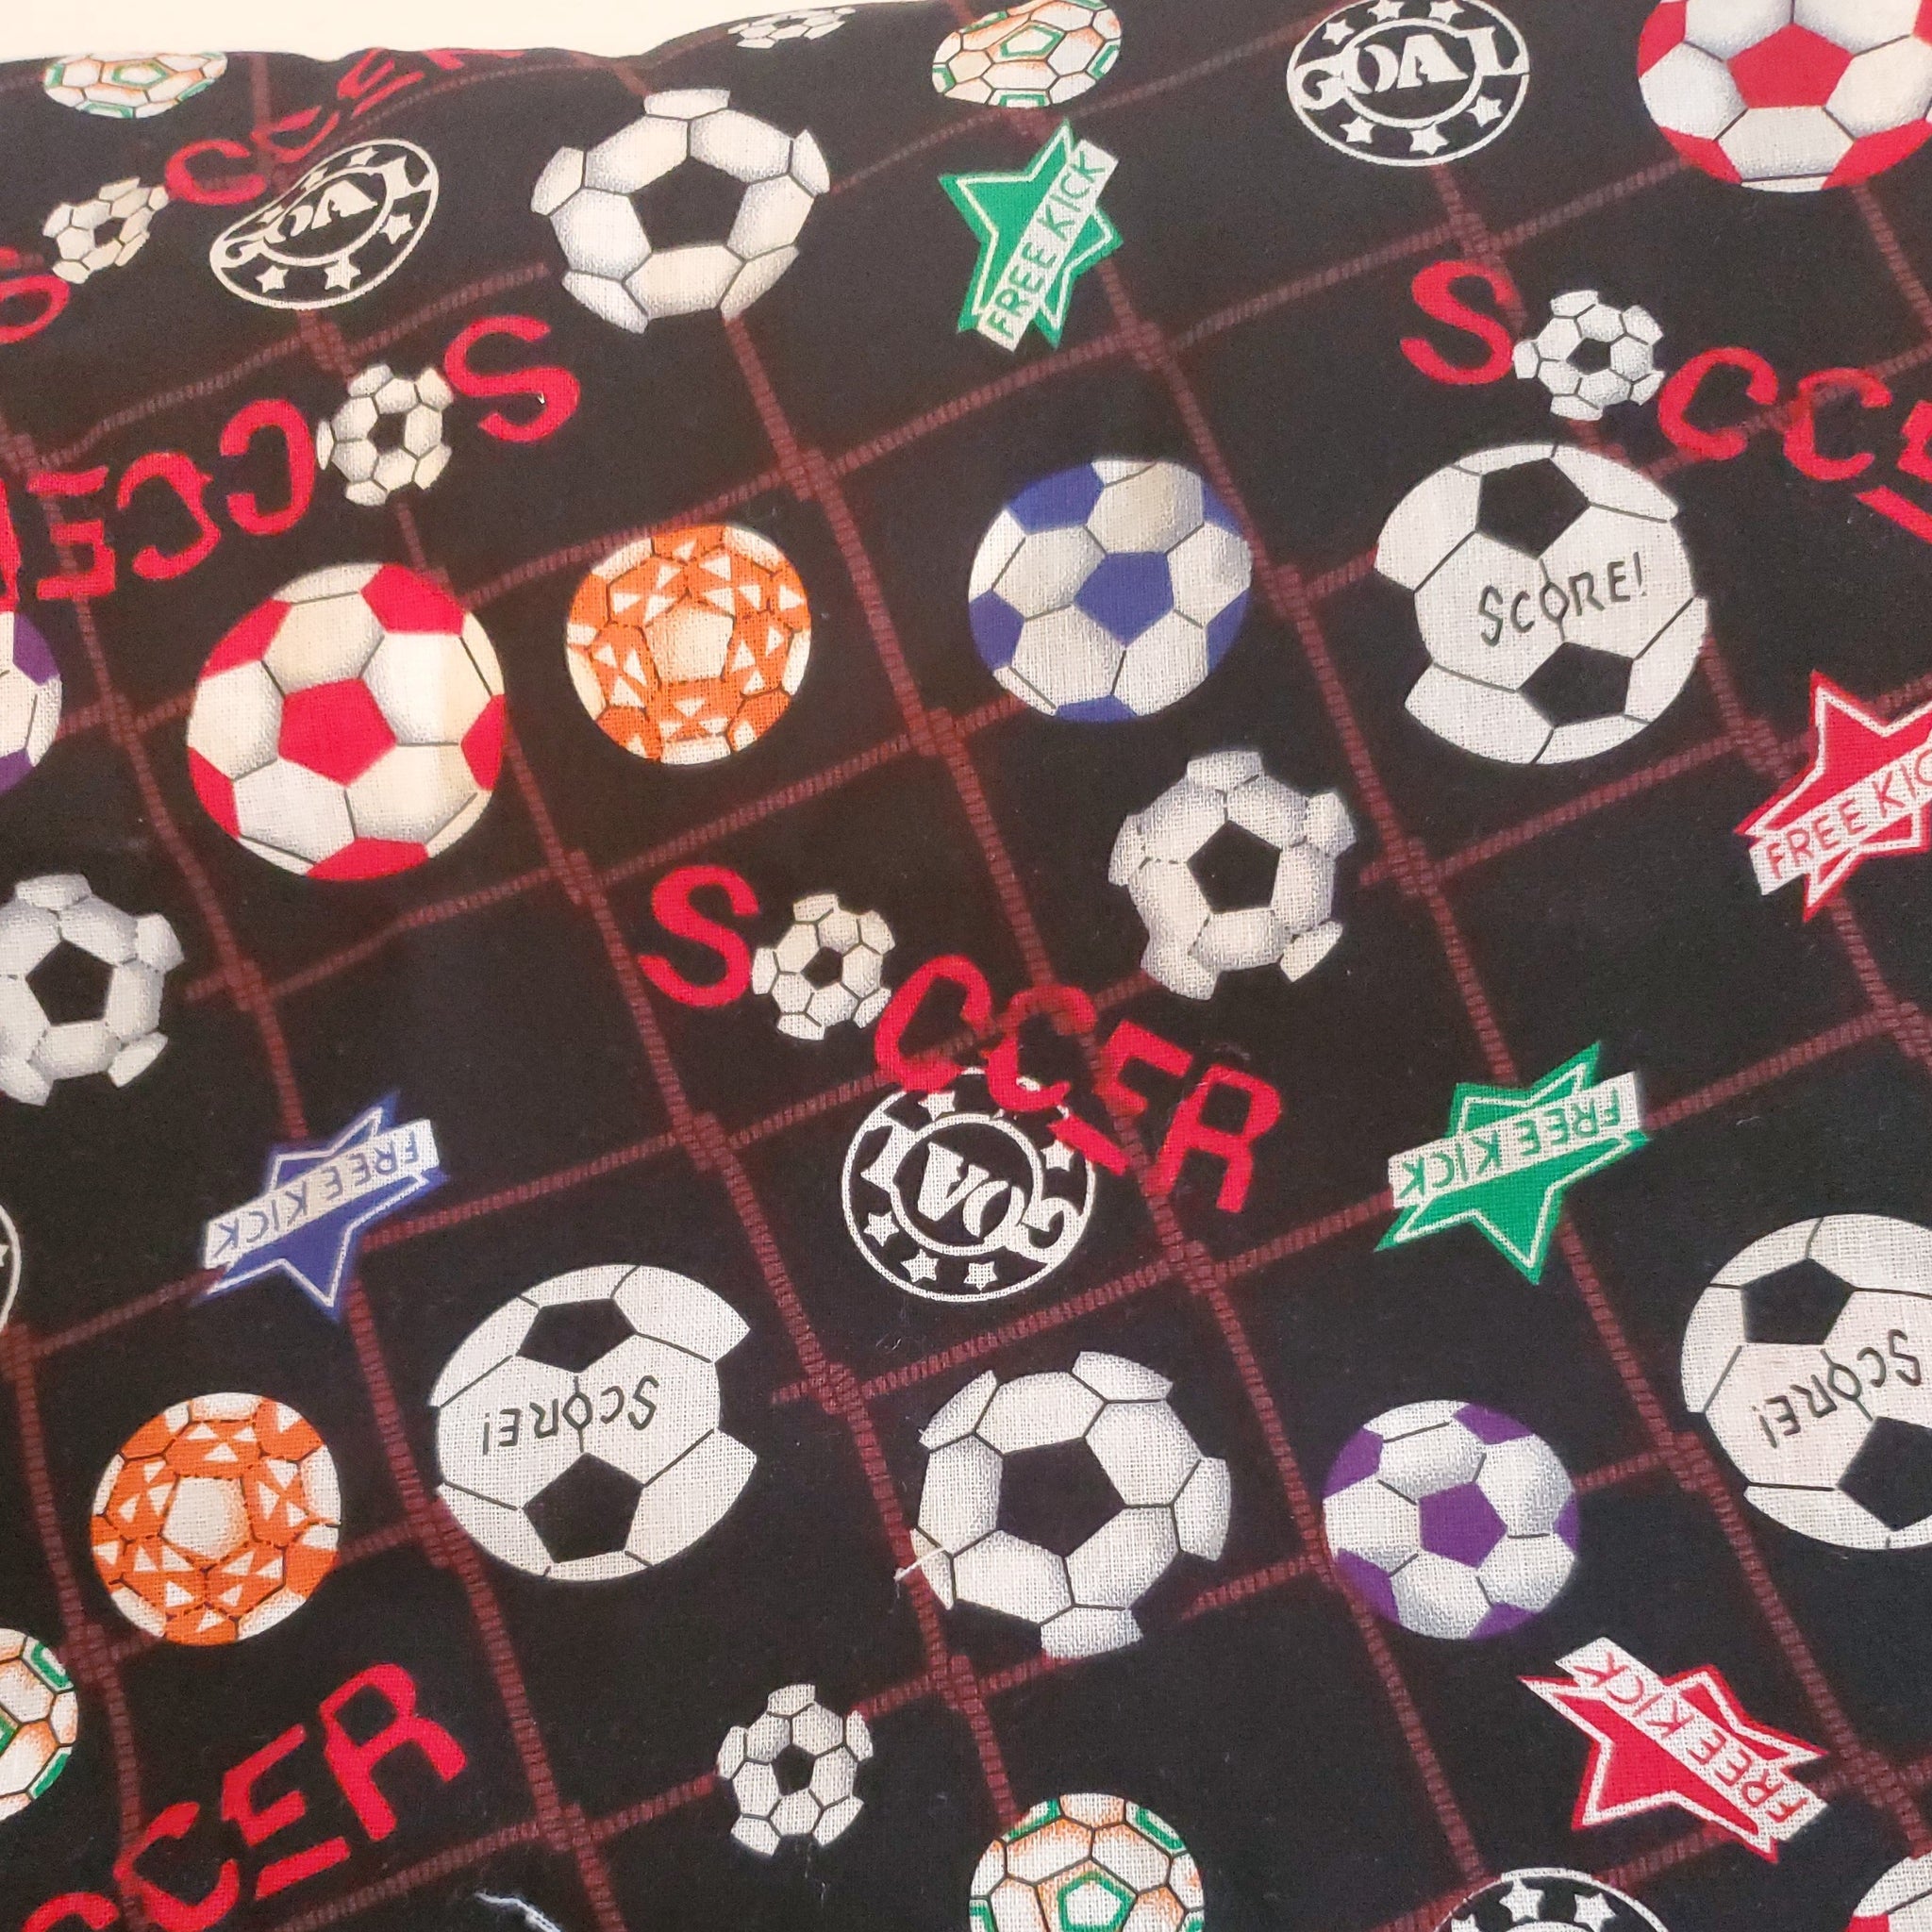 soccer ball & soccer terminology novelty cotton fabric